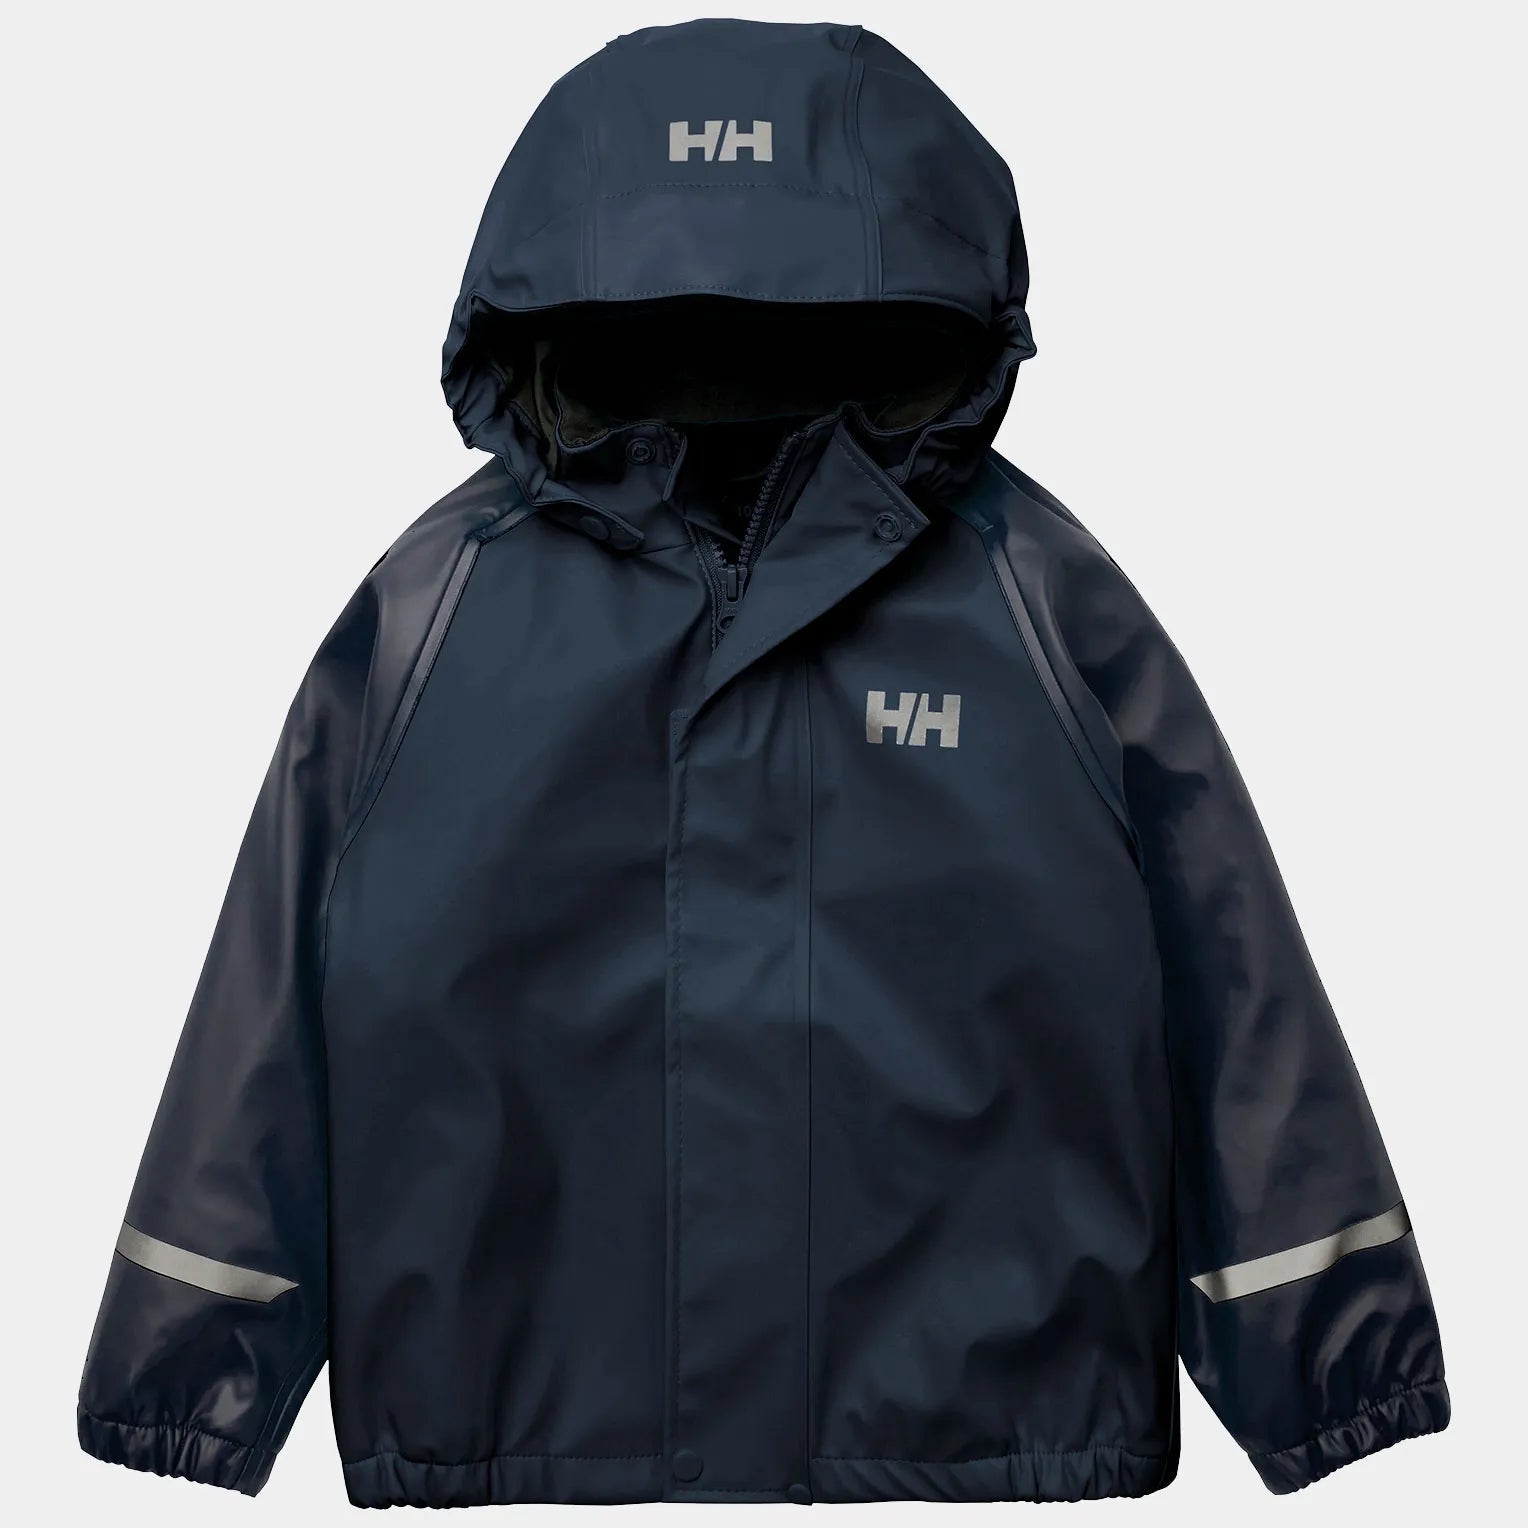 Helly Hansen Kids Bergen Fleece-Lined Rain Set 2.0 - Mountain Kids Outfitters